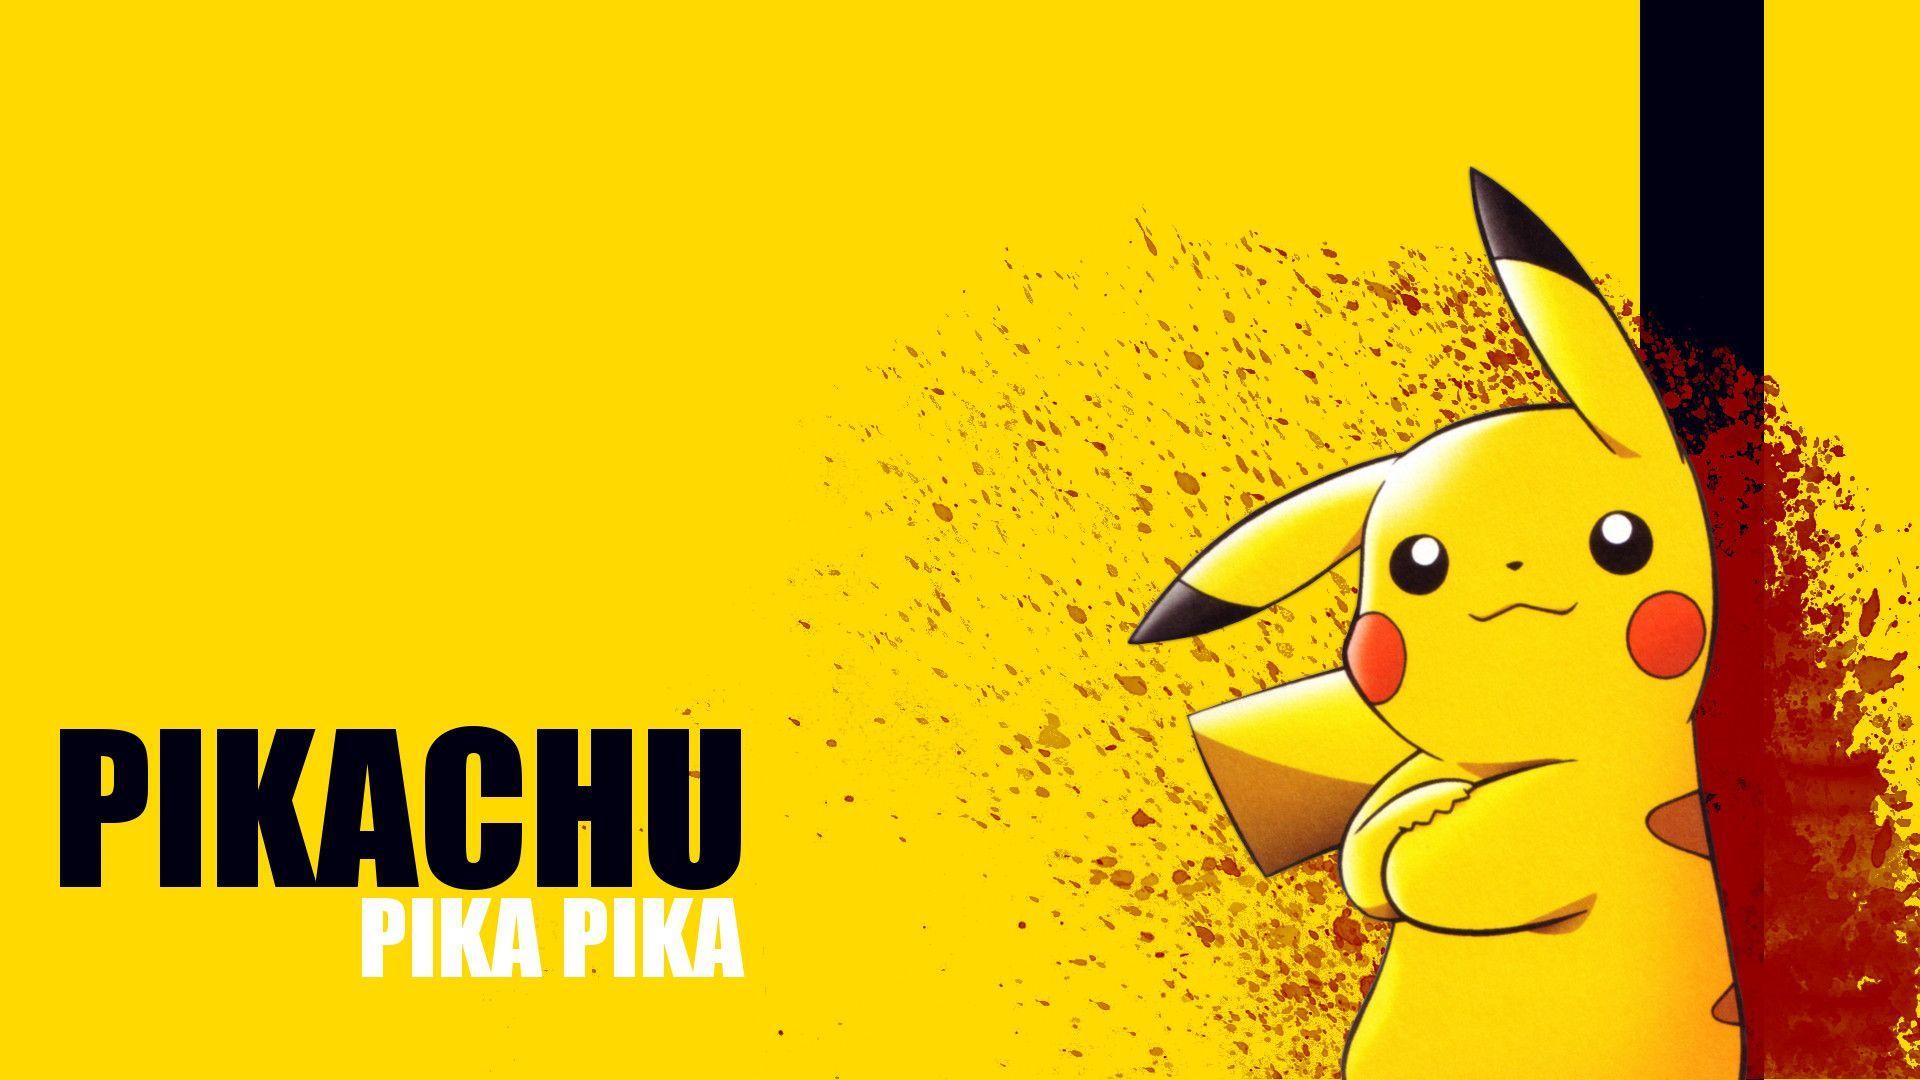 Pikachu PC Wallpapers - Wallpaper Cave